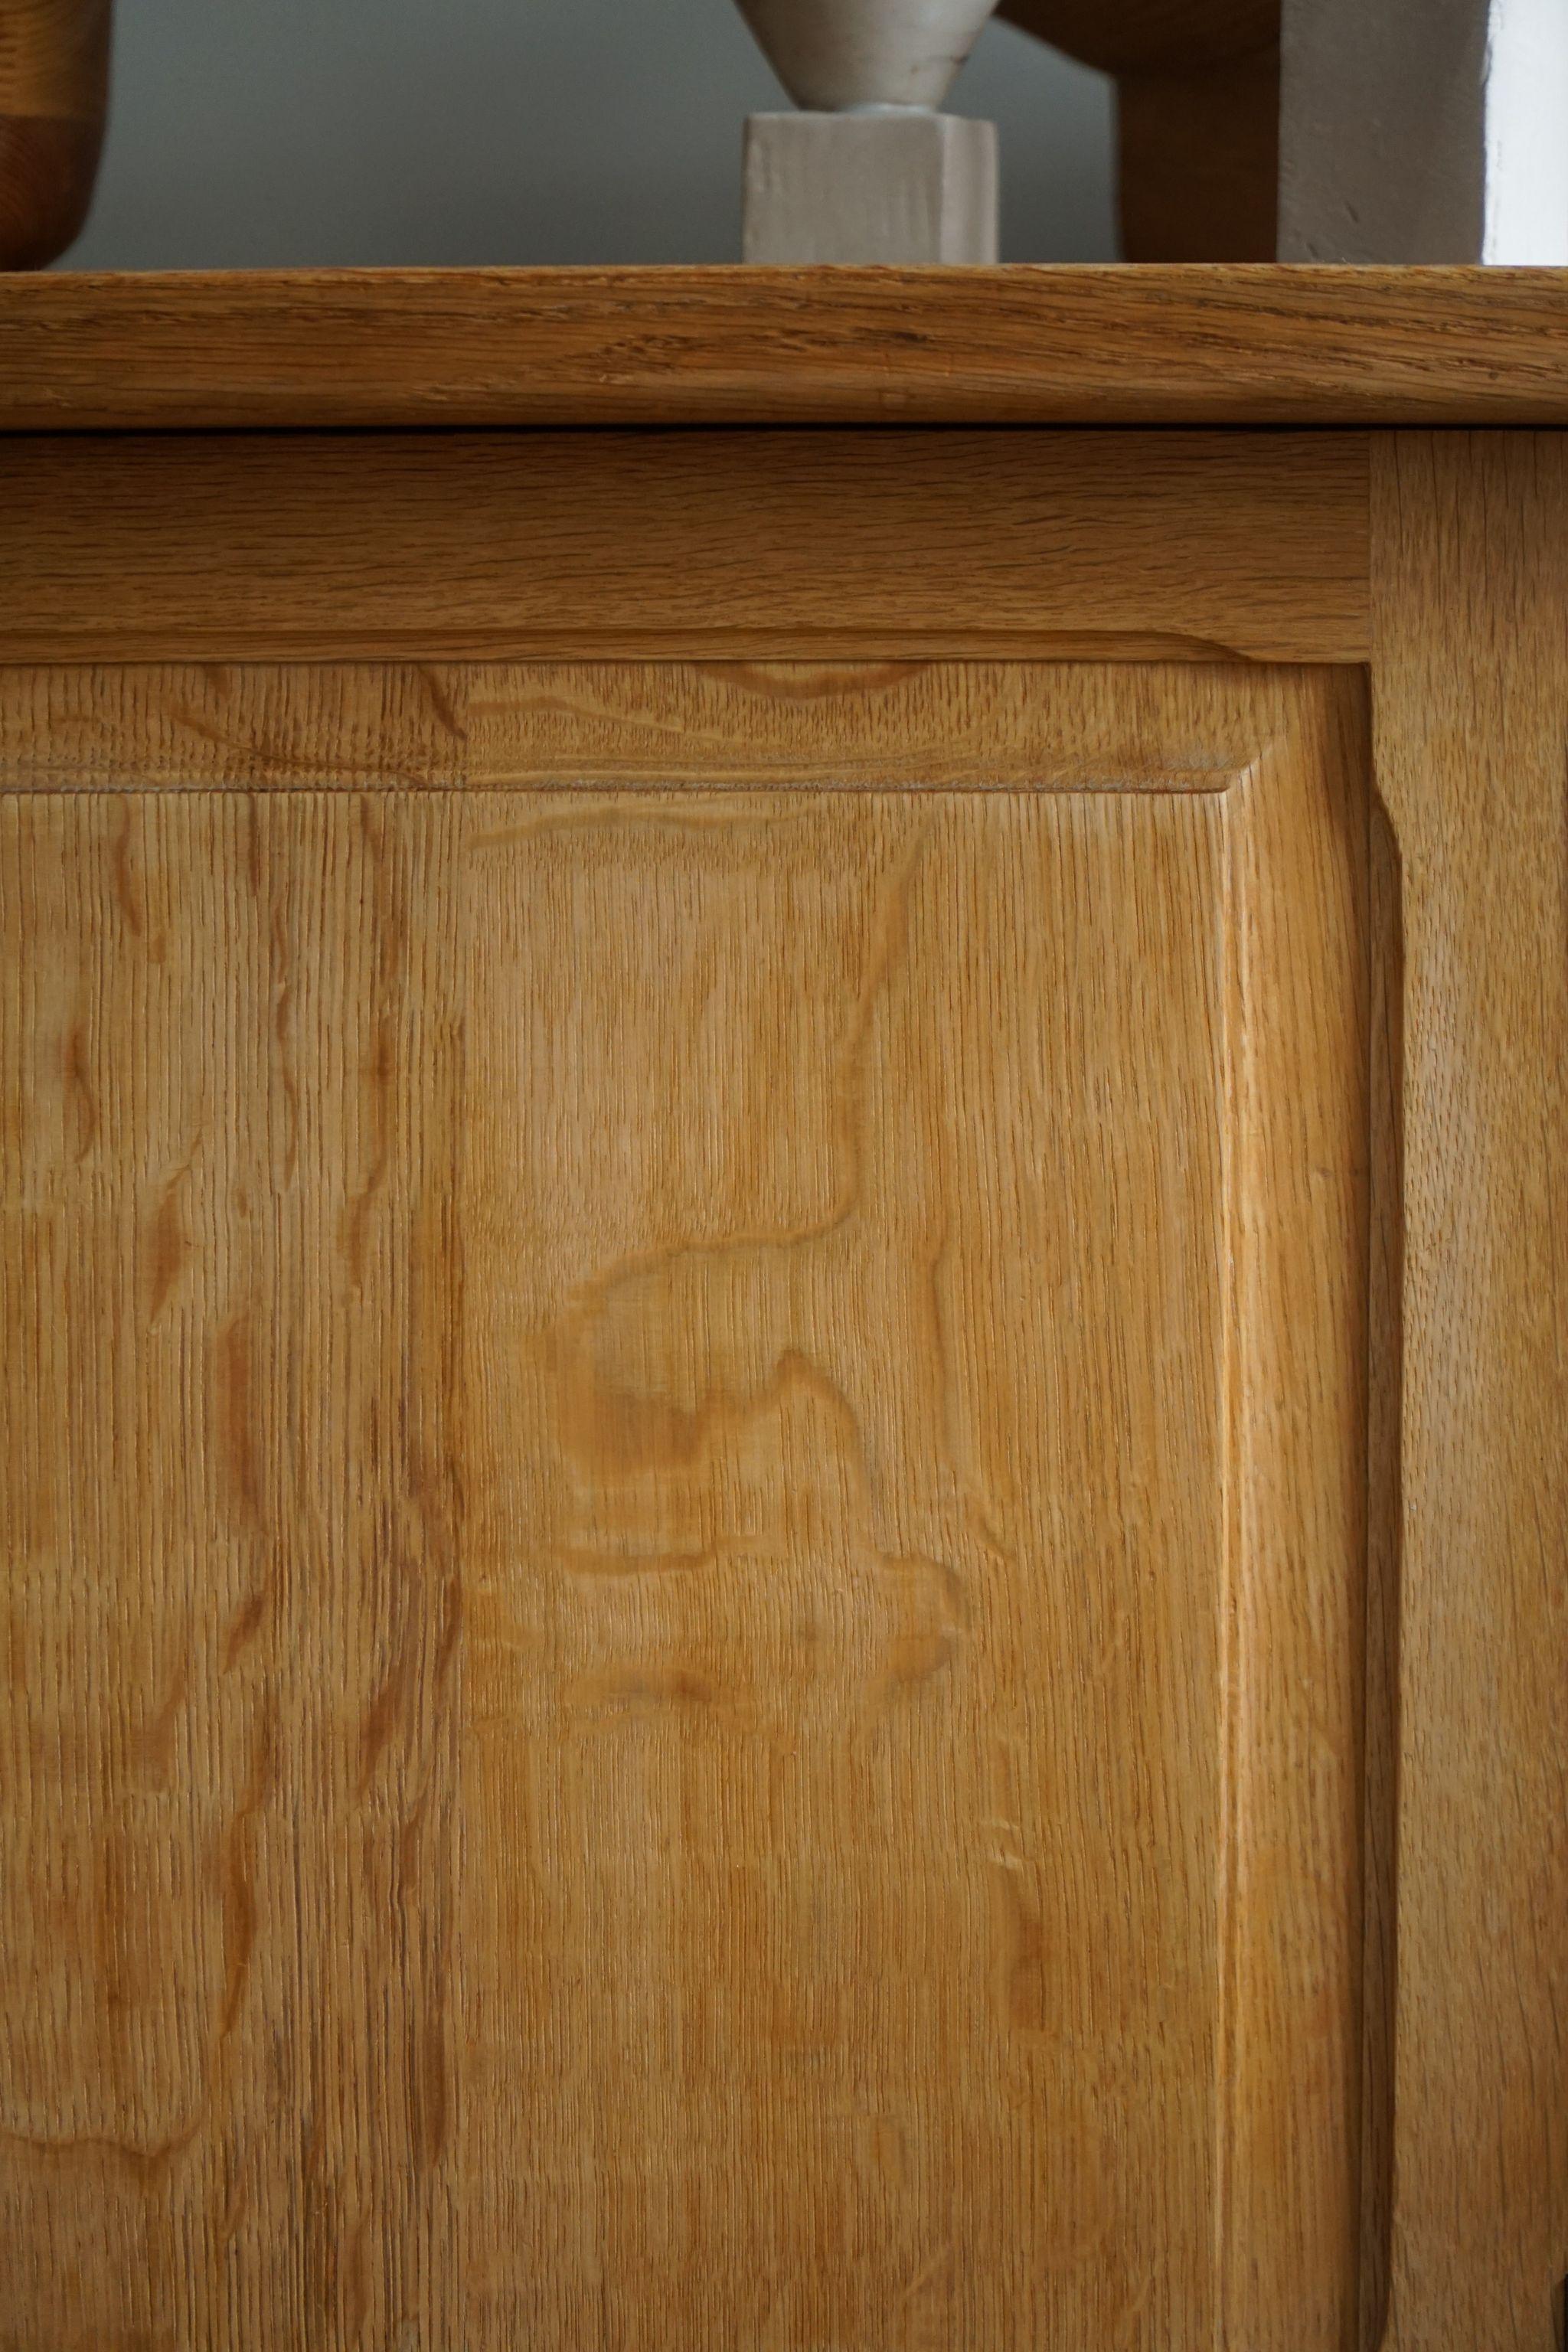 Sideboard in Oak, Made by a Danish Cabinetmaker, Mid Century Modern, 1960s For Sale 5